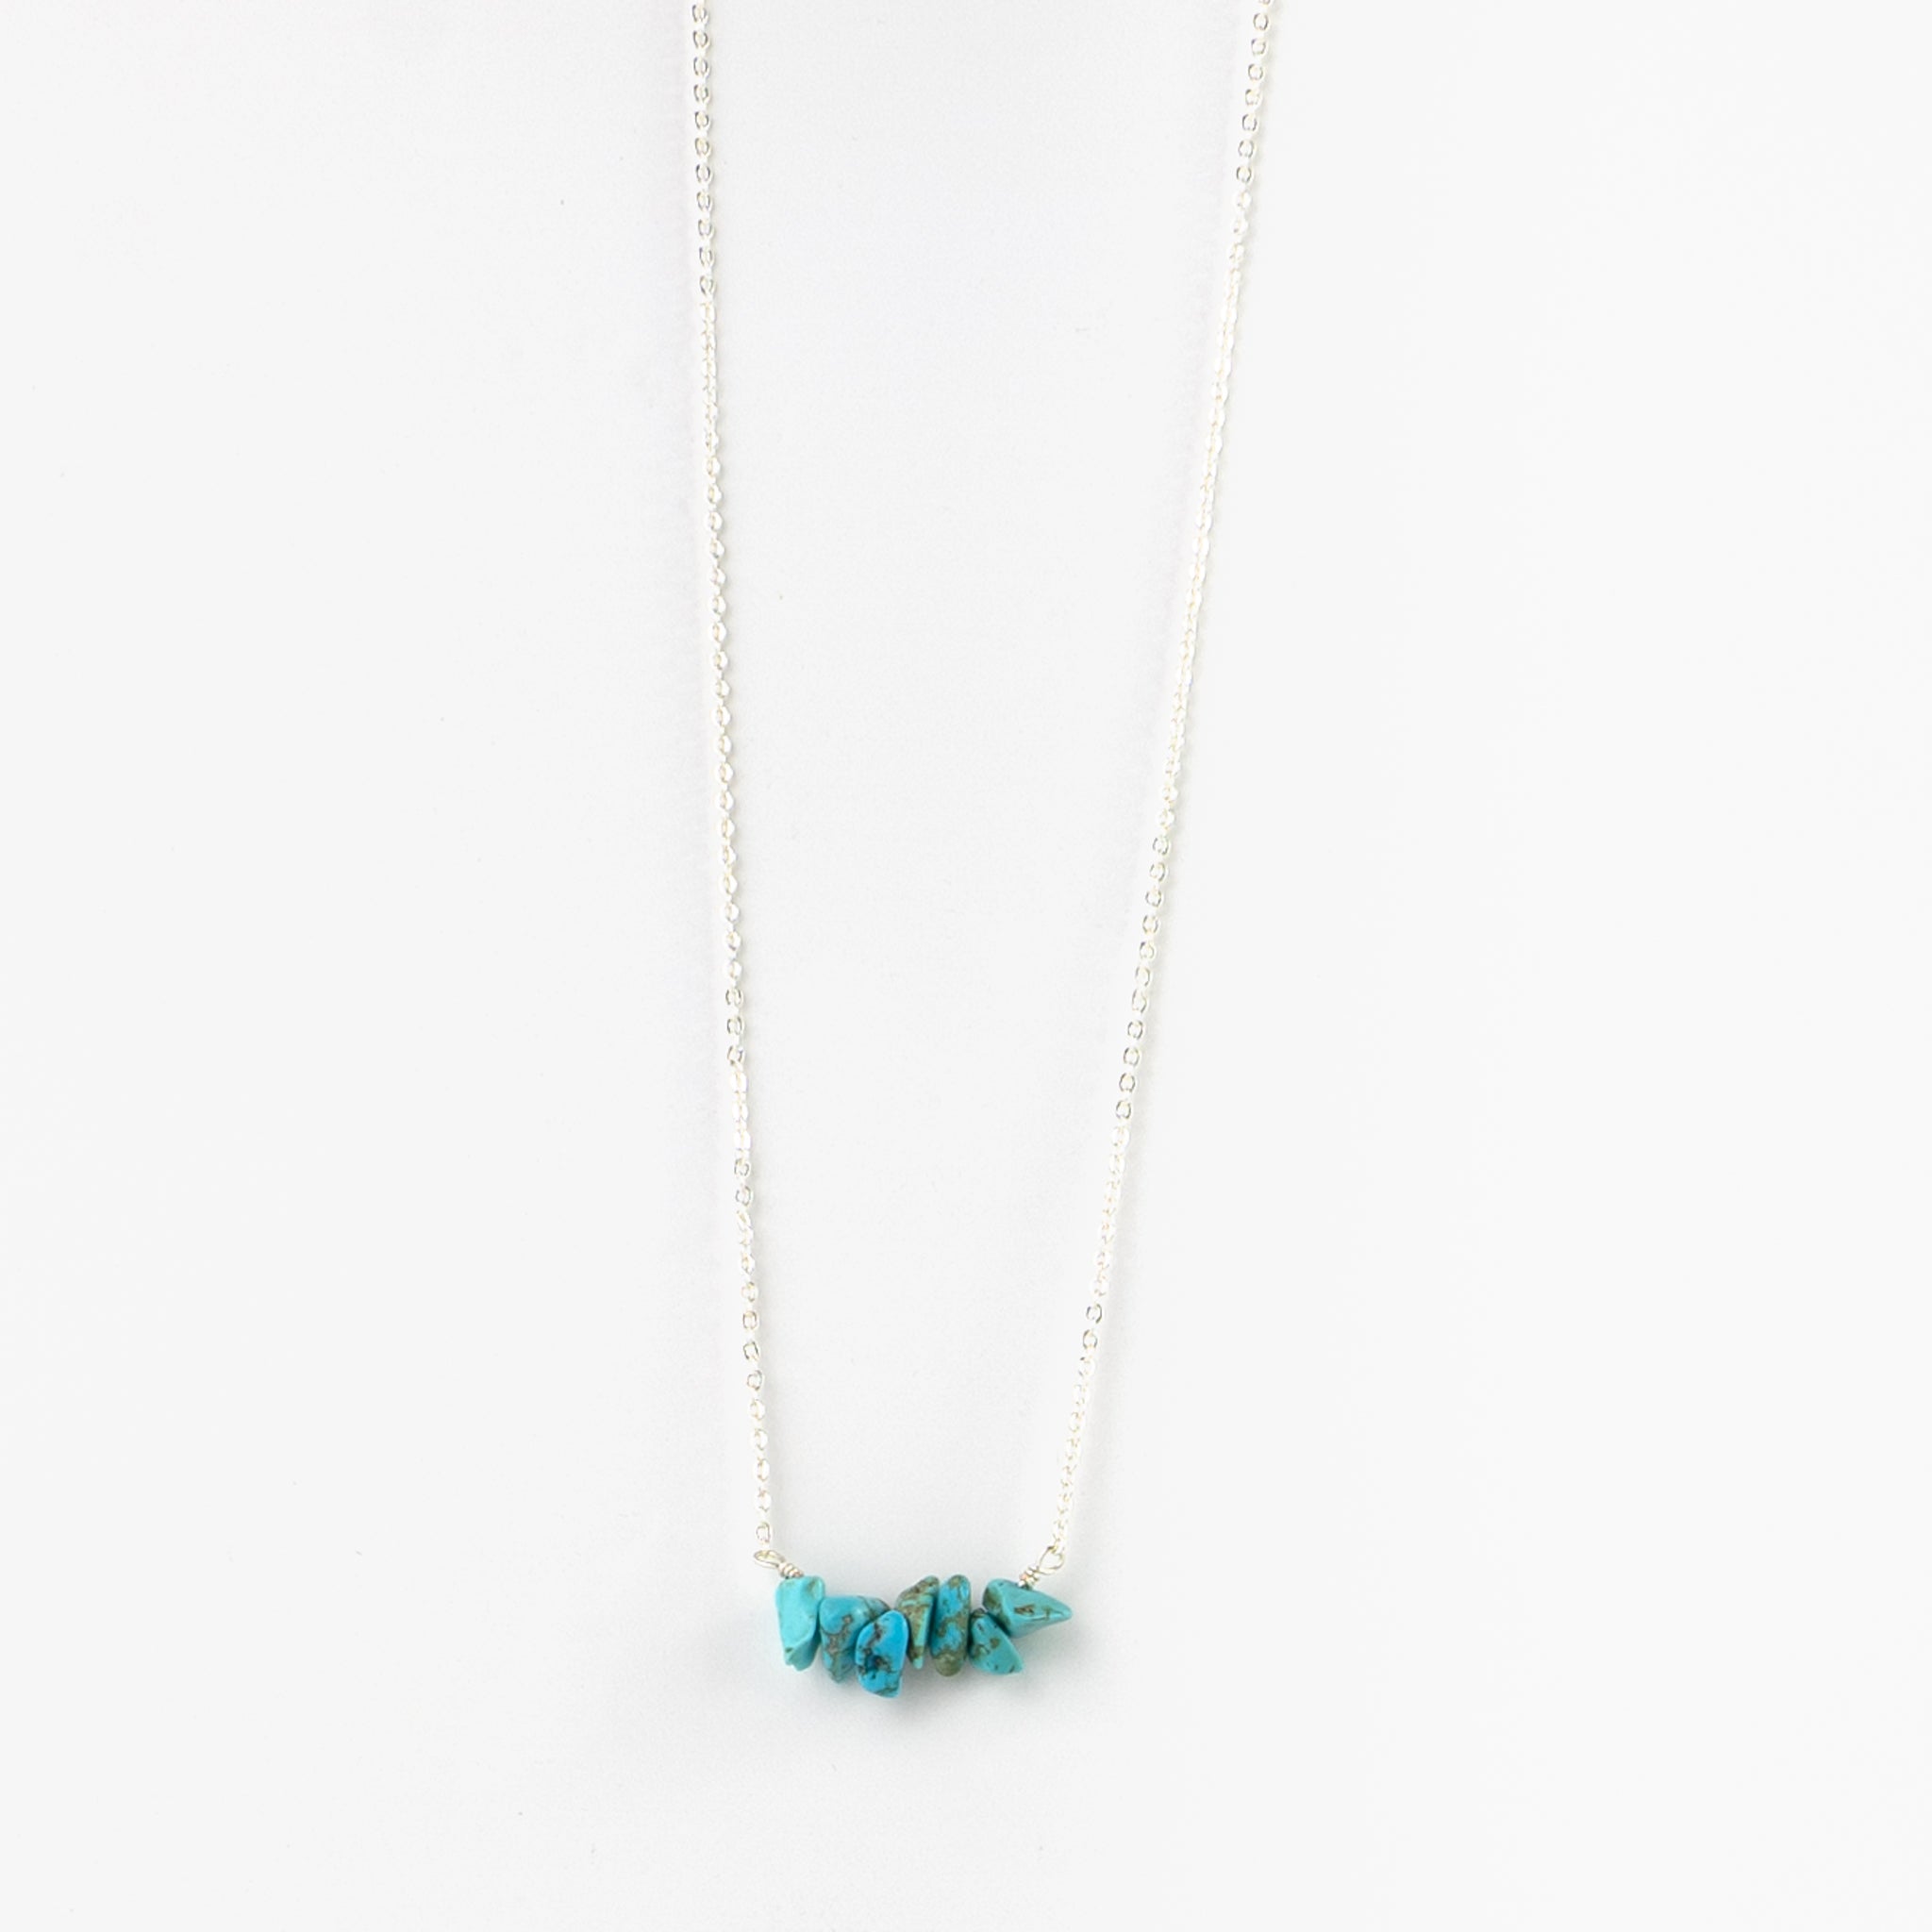 Asri Turquoise & Wood Necklace Set - Pineapple Island